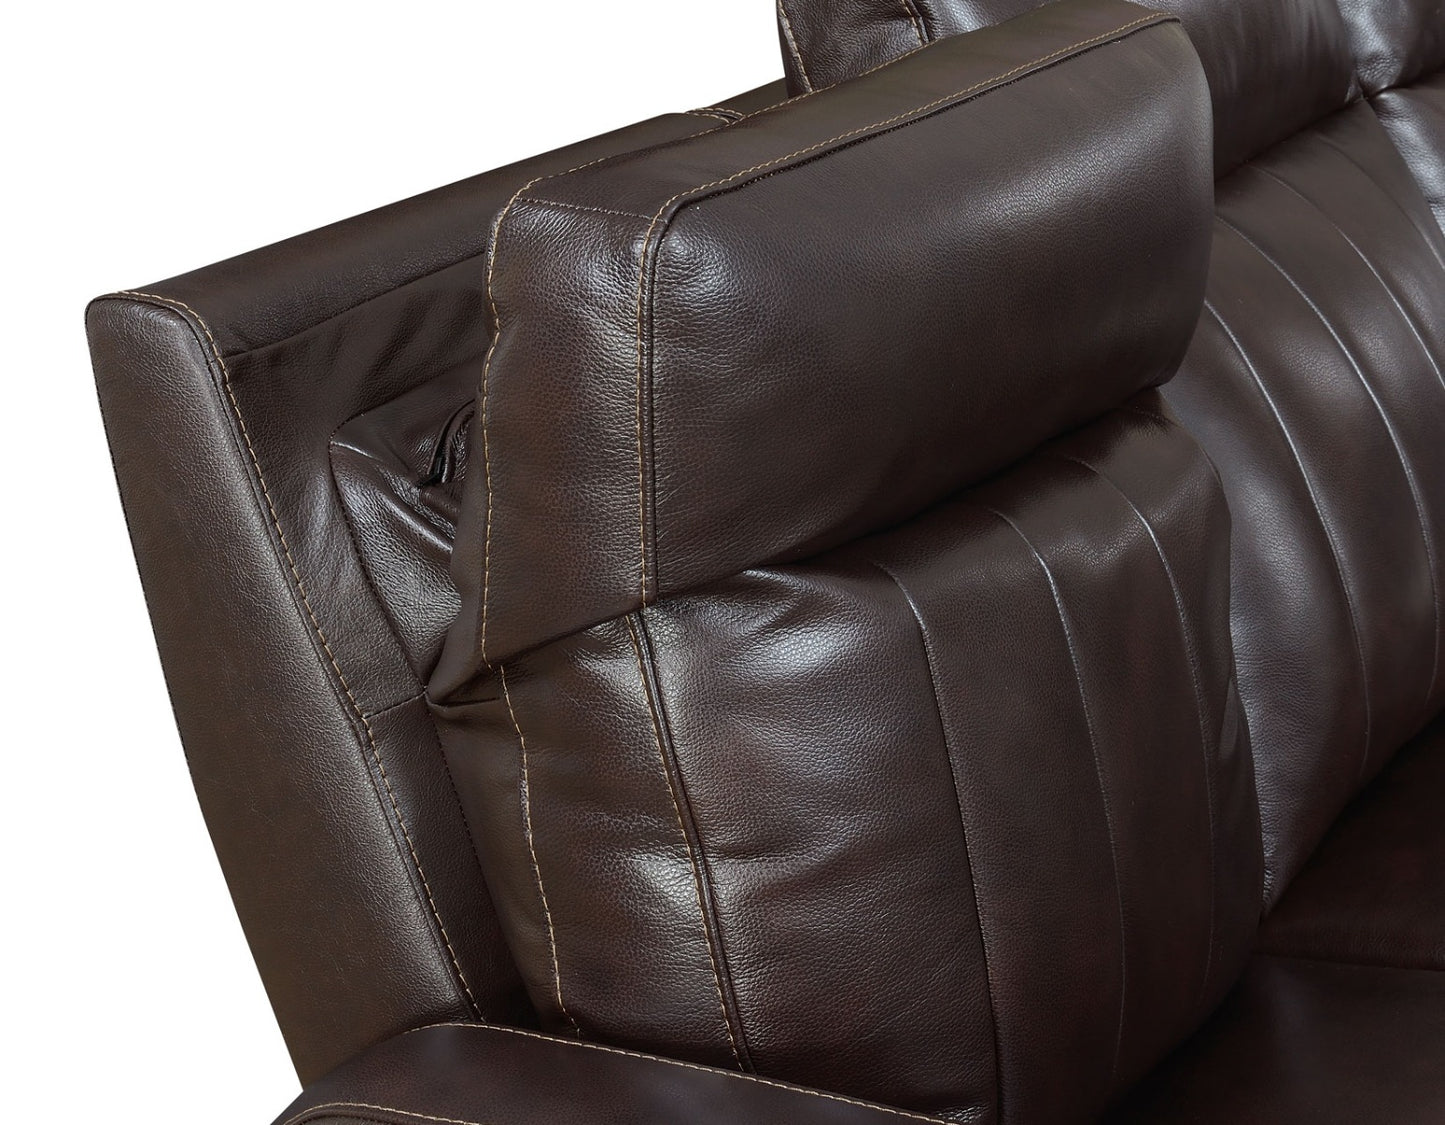 Coachella Dual Power Leather Reclining Sofa Set - Top Grain Leather